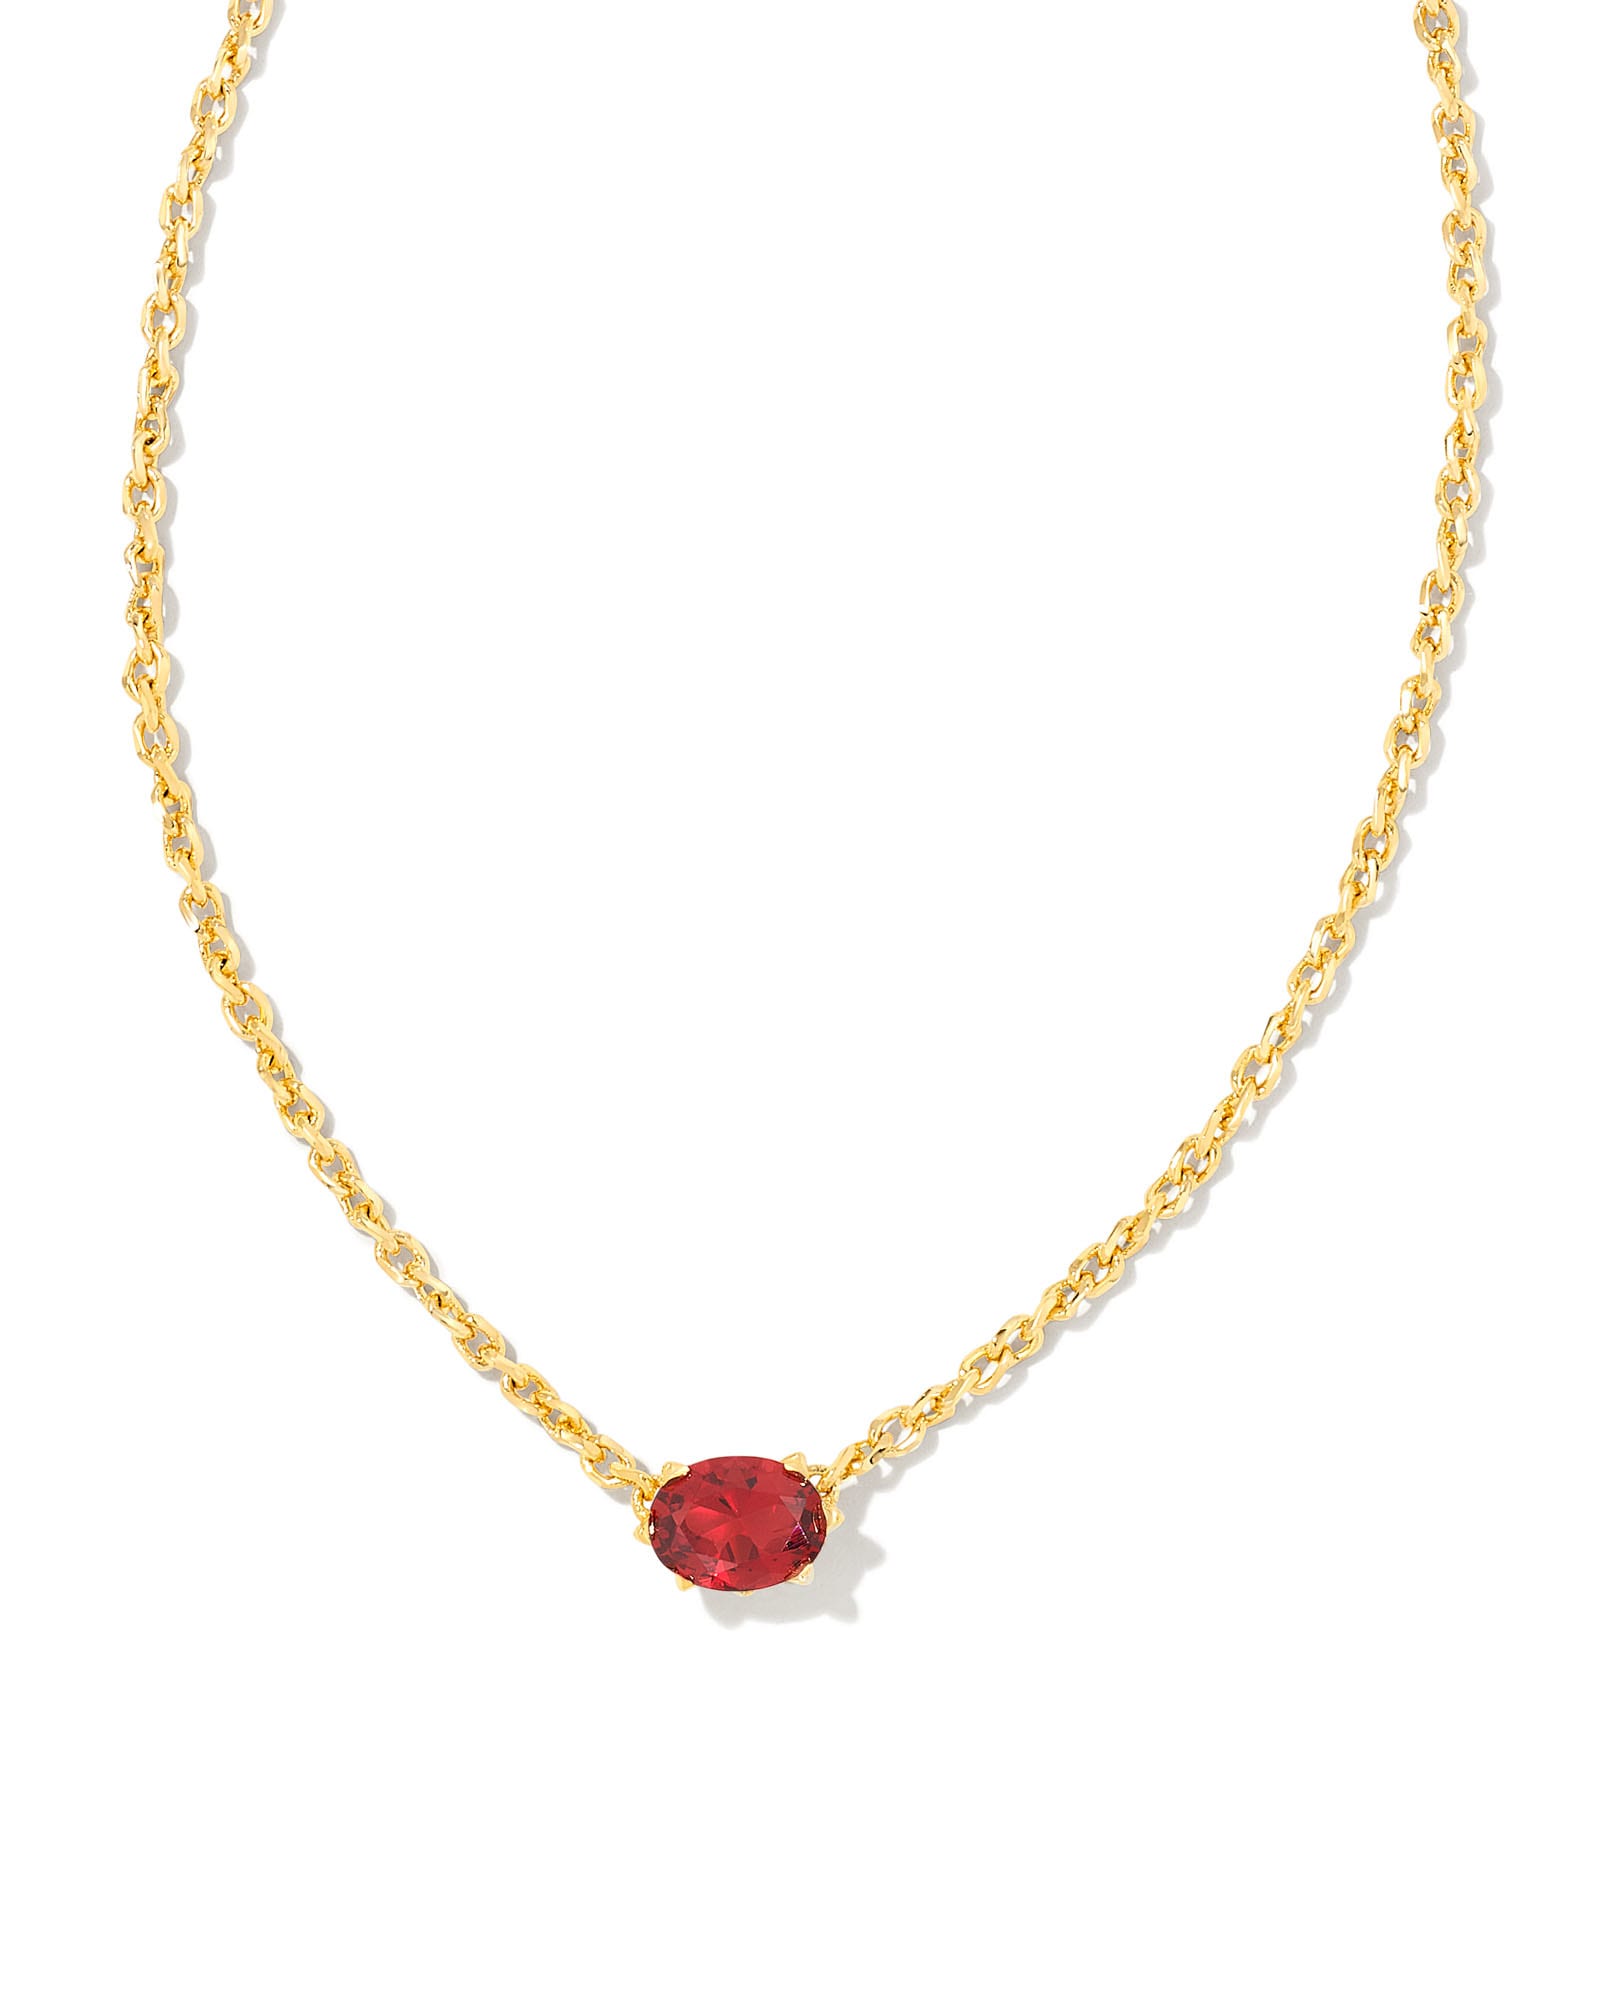 Kendra Scott Cailin Gold Pendant Necklace in Burgundy Crystal | Nanogem 1563